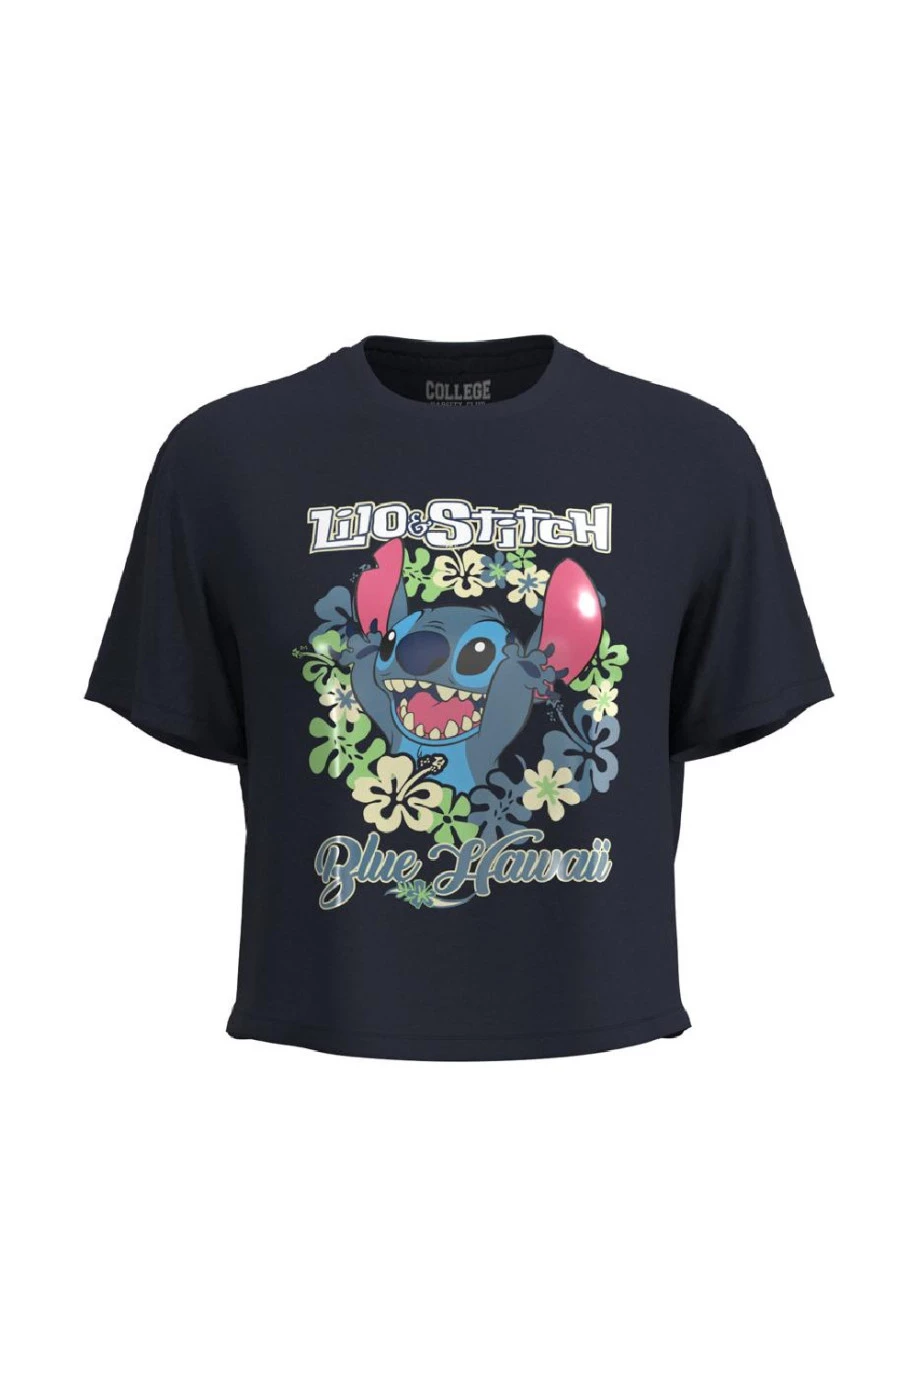 Camiseta unicolor con manga corta y diseño de Lilo & Stitch